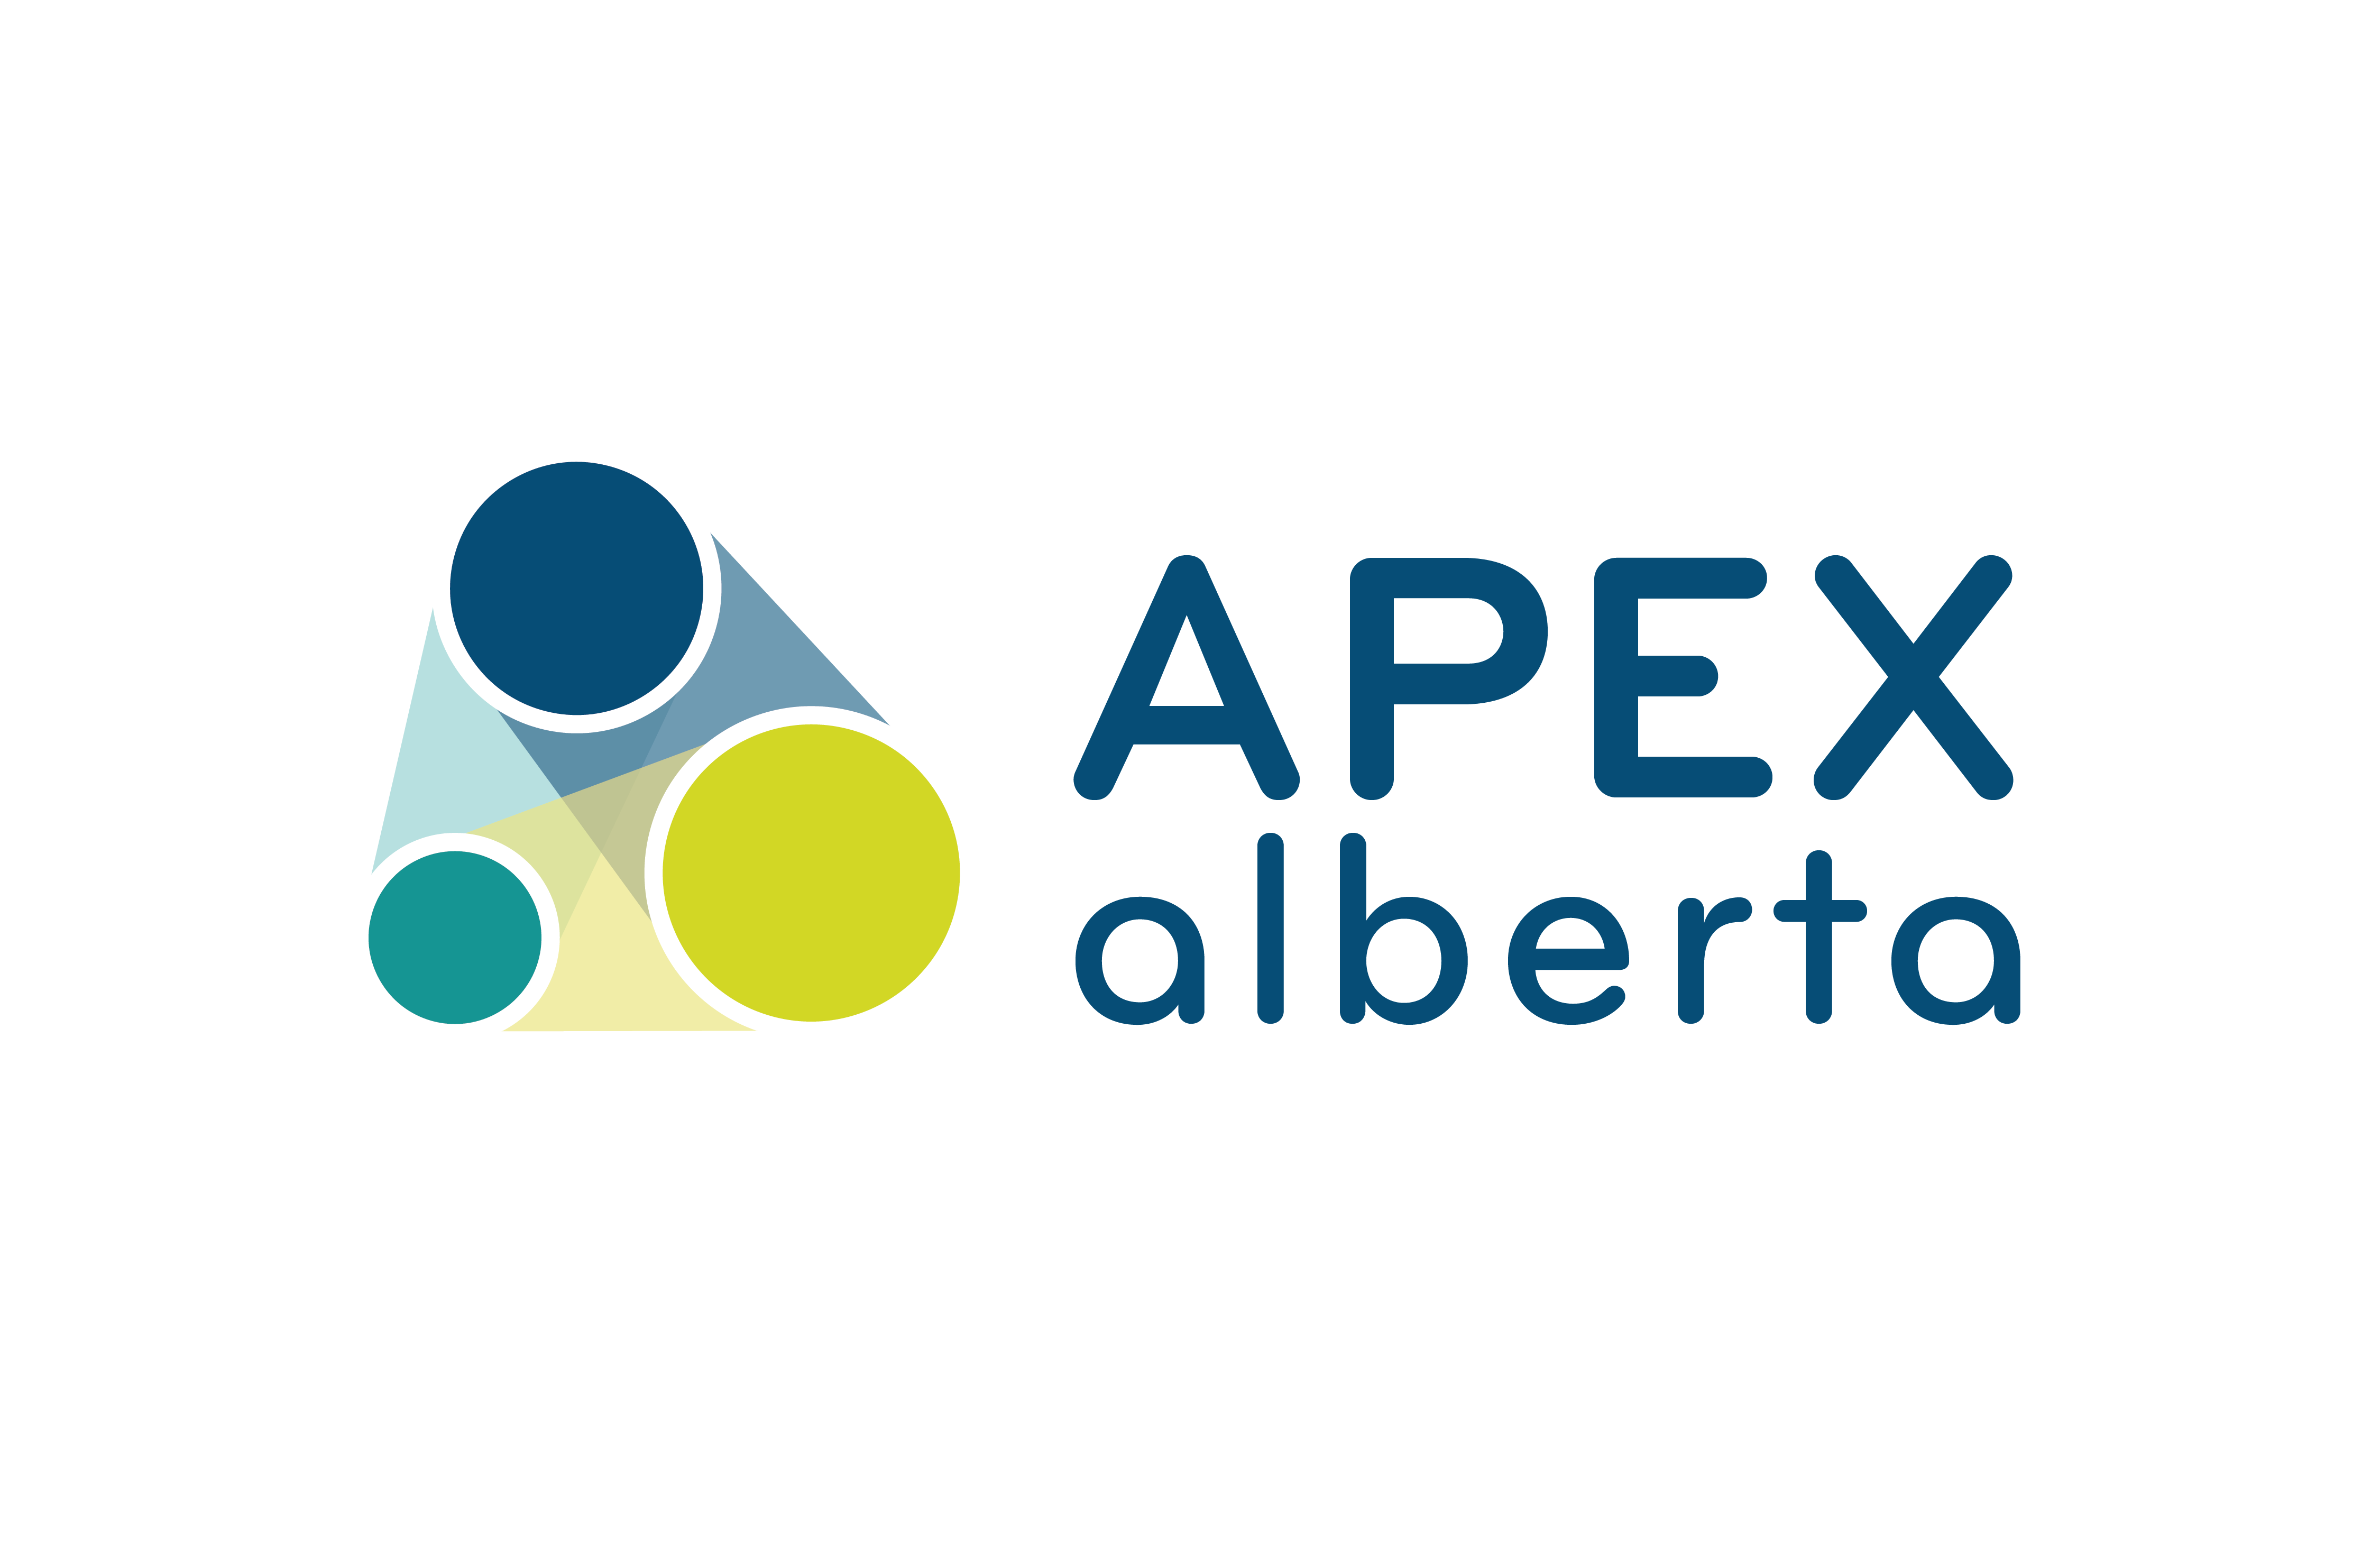 APEX Alberta